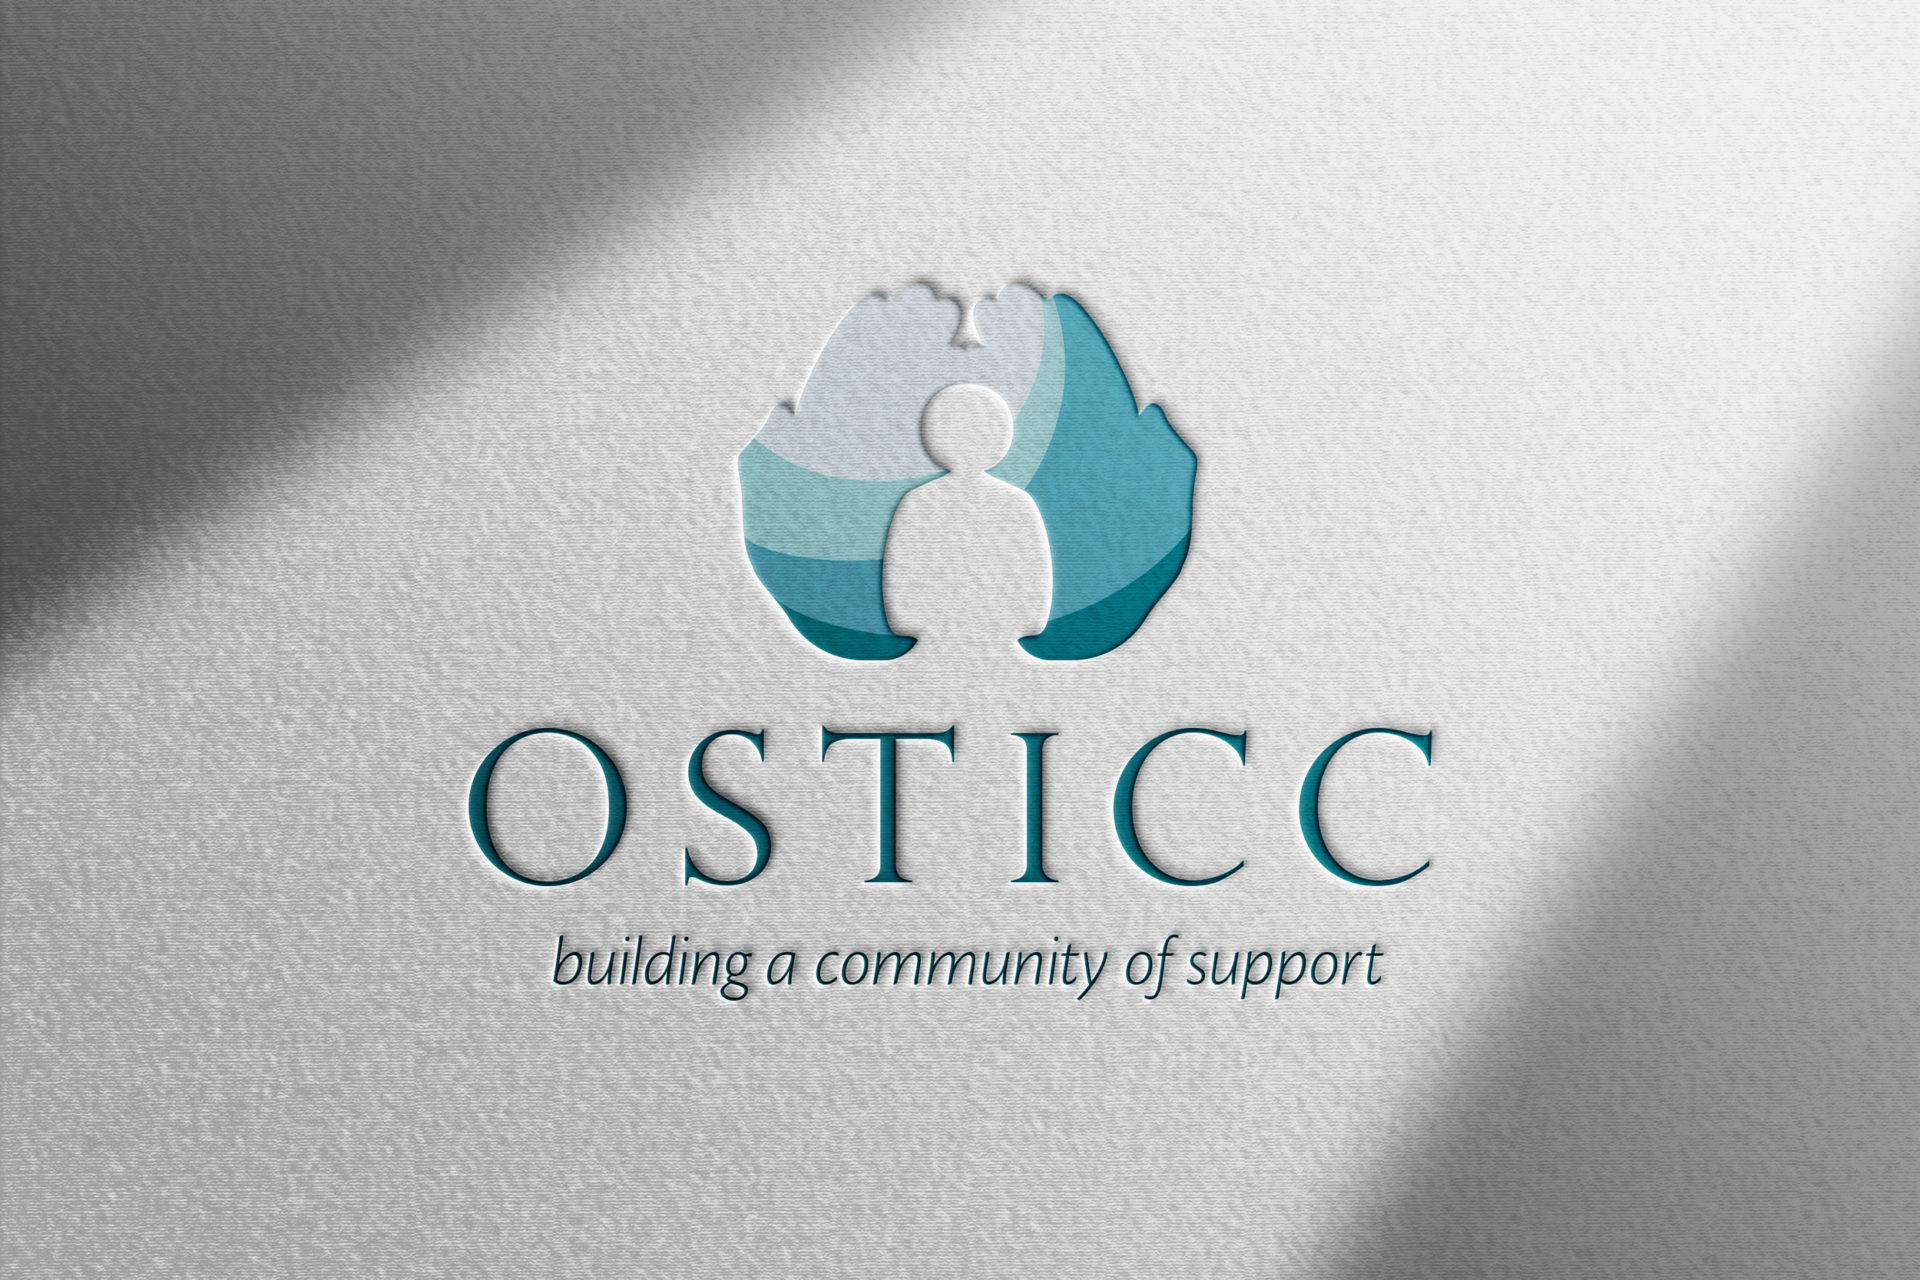 OSTICC Identity & Web Presence